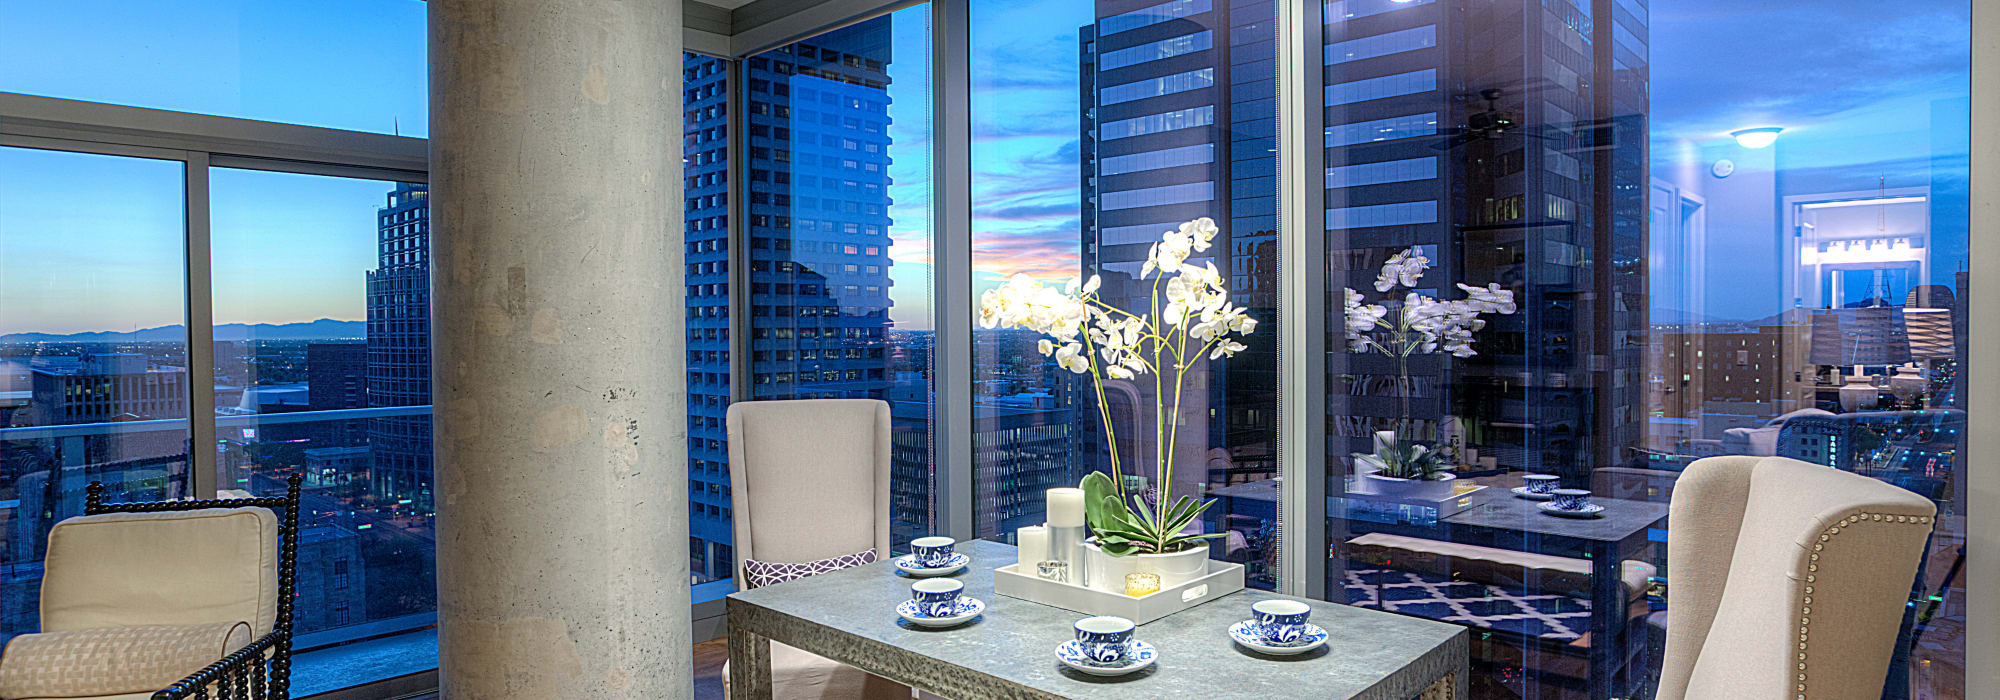 Enjoy our luxurious apartments at CityScape Residences in Phoenix, Arizona